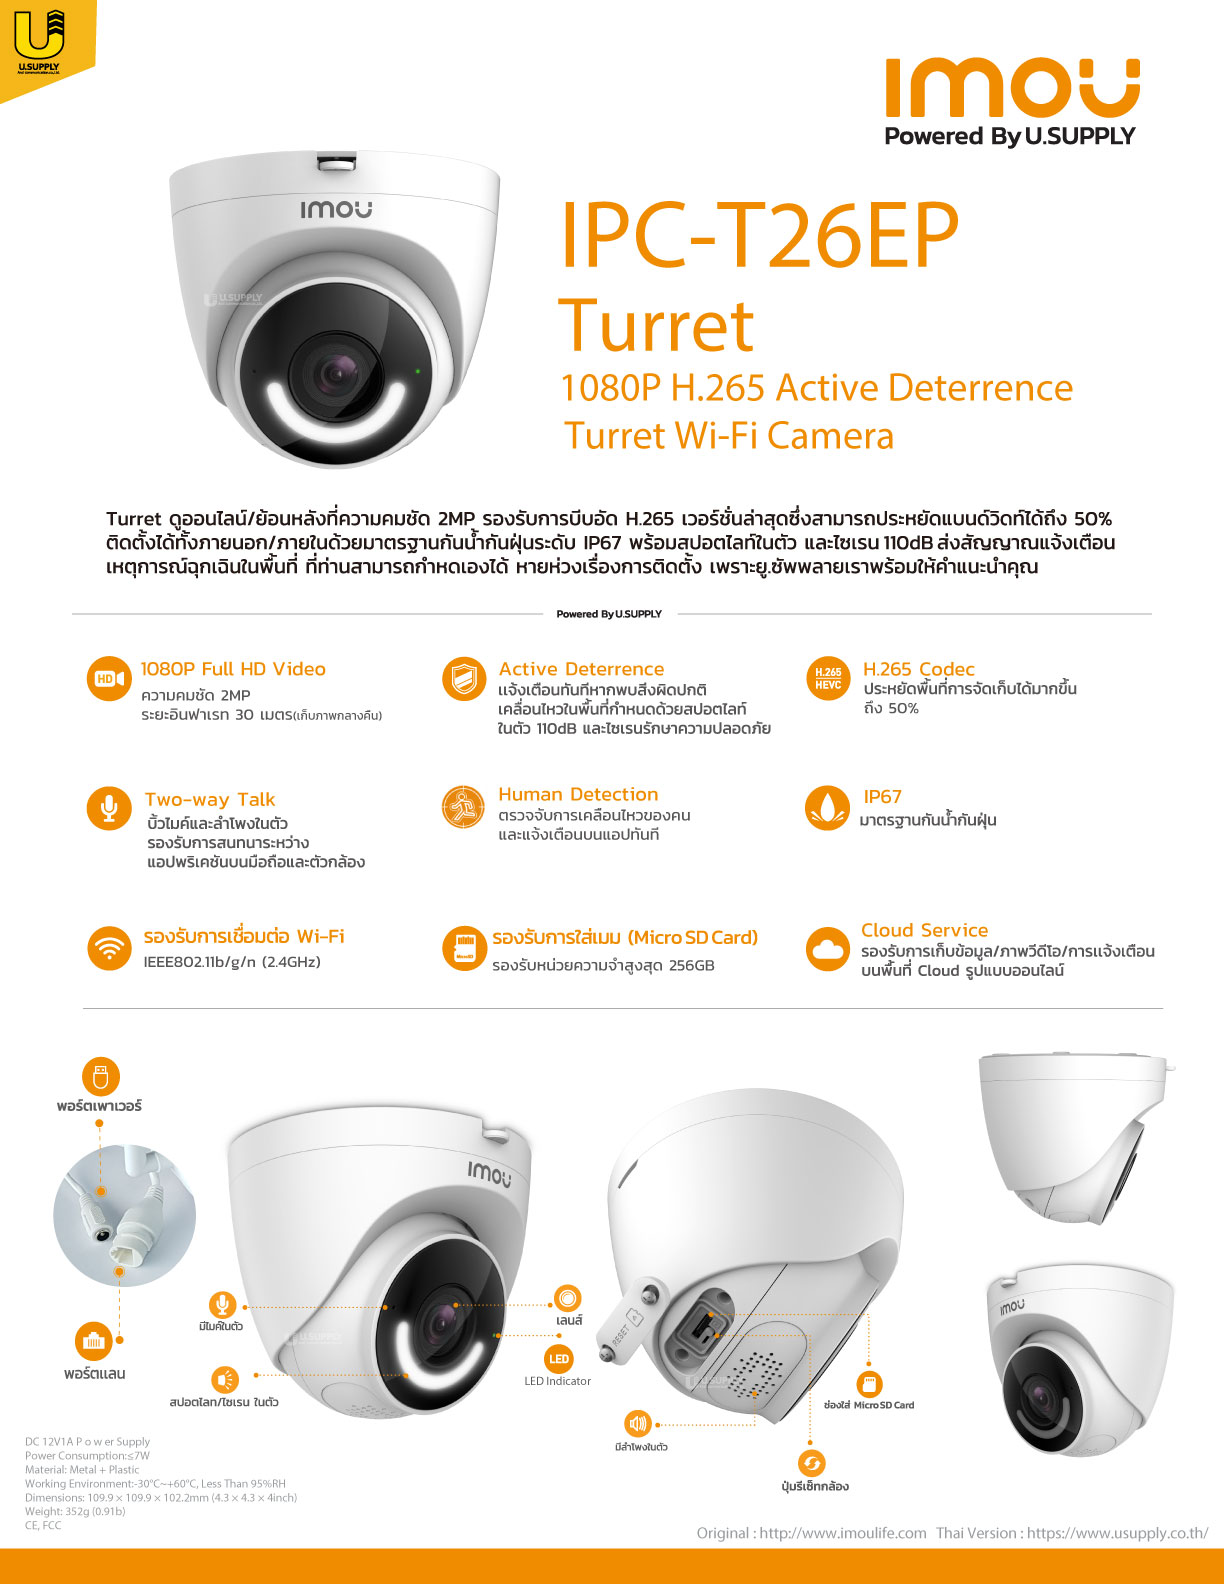 Turret IPC-T26EP IMOU